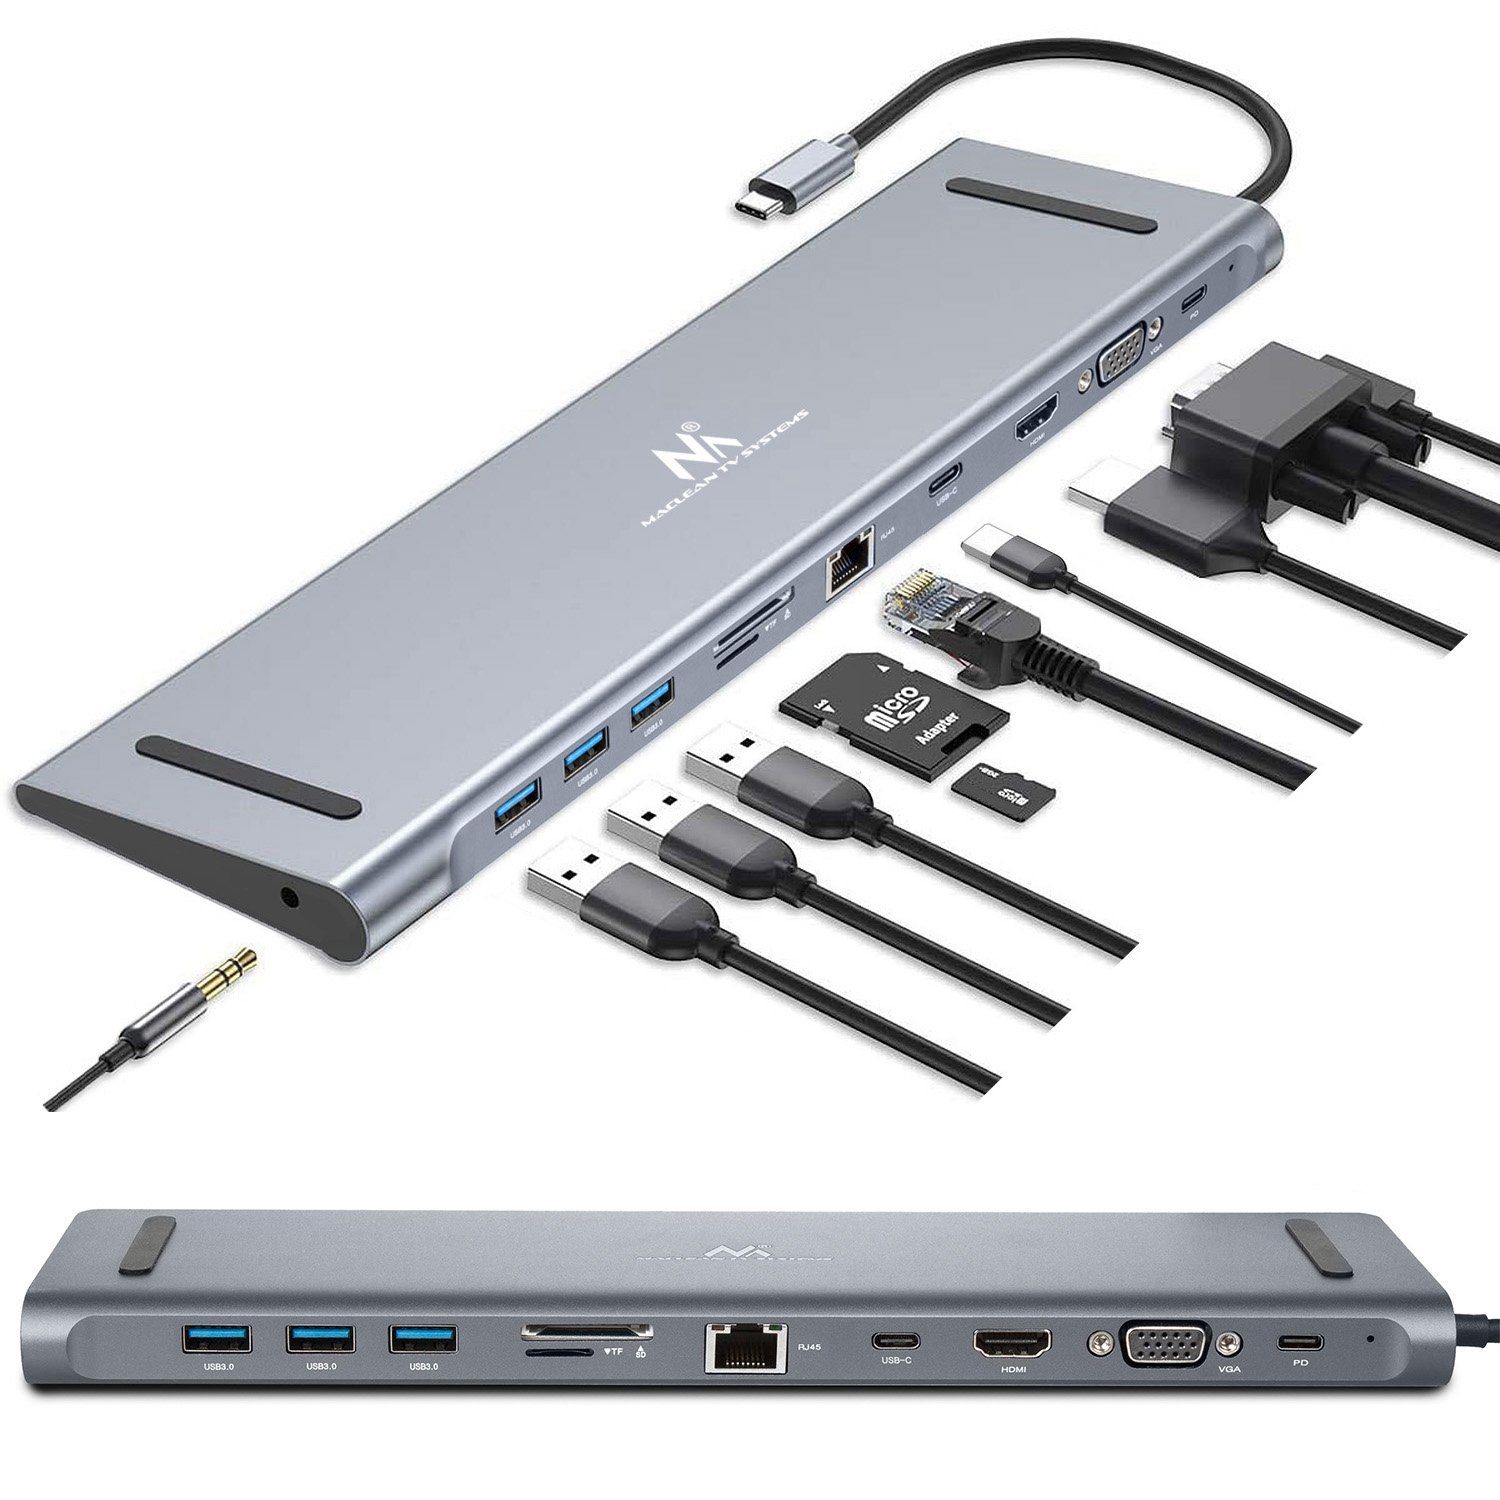 Maclean MCTV-850 USB-Adapter USB-C zu USB-C, USB 3.0, HDMI, VGA, RJ45, SD,  TF, 3,5-mm-Klinke, 11 Schnittstellen in einem Gerät; Power-Delivery  Ladefunktion